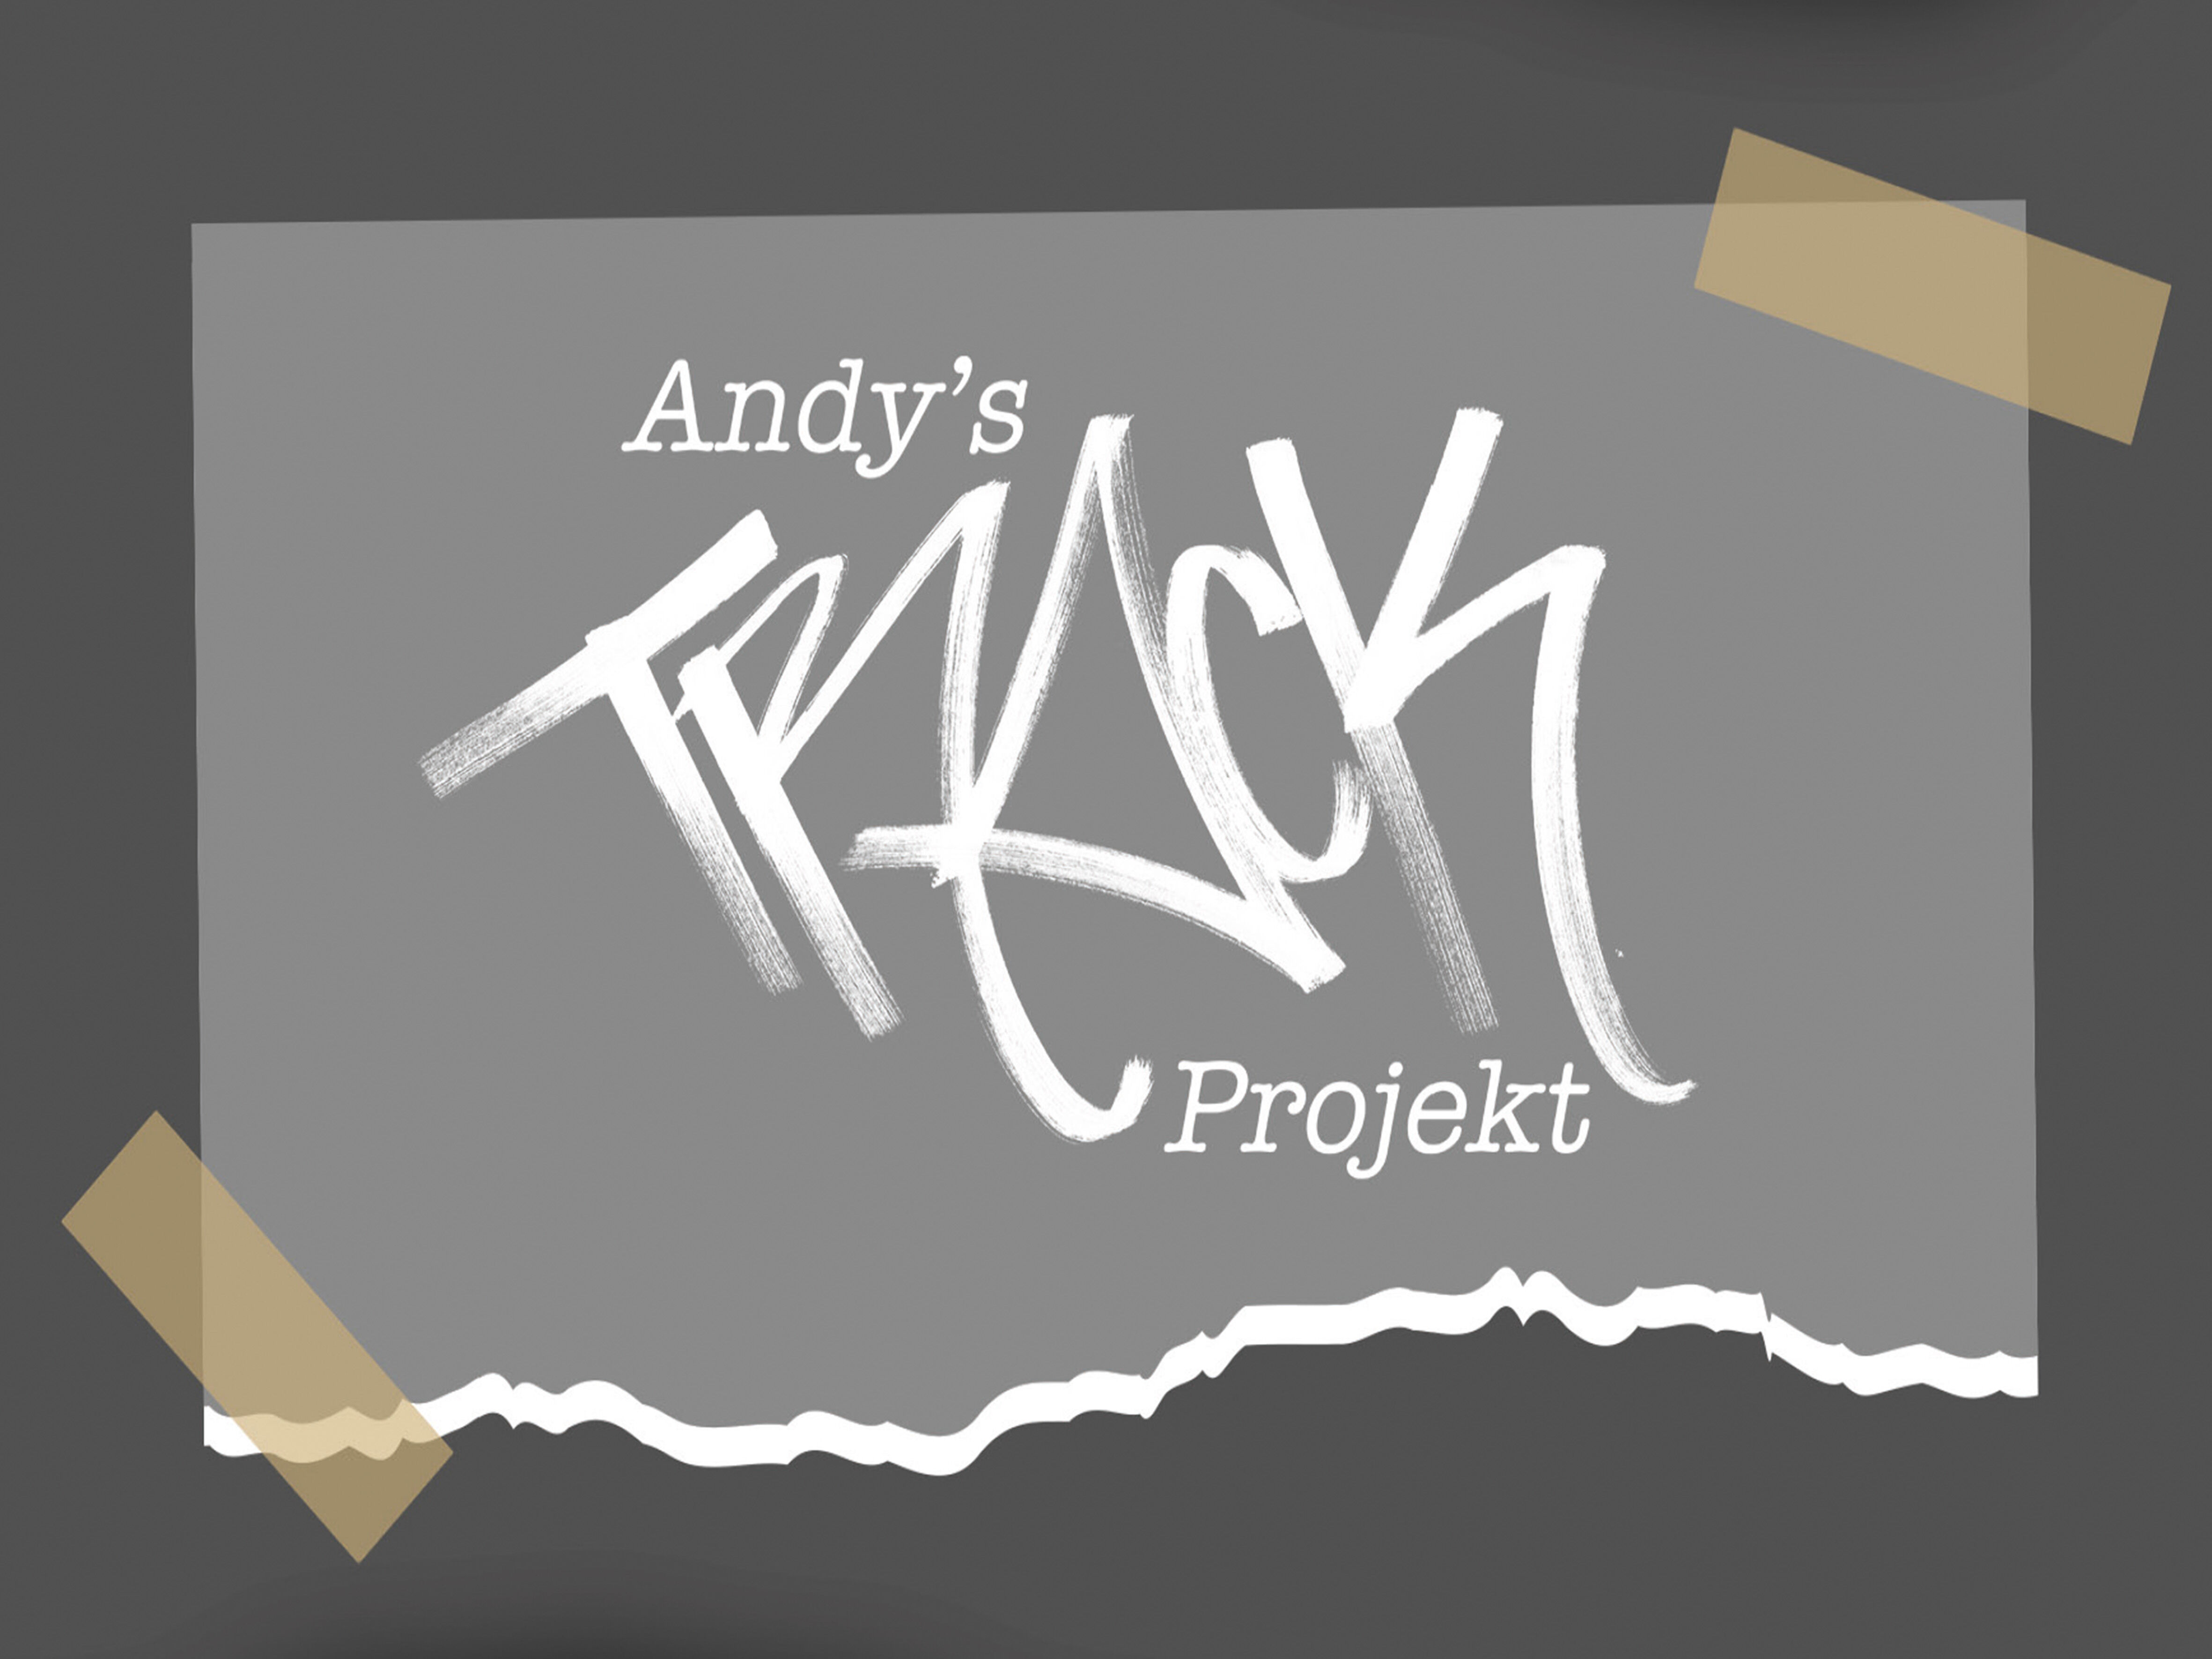 Andy's Track Projekt